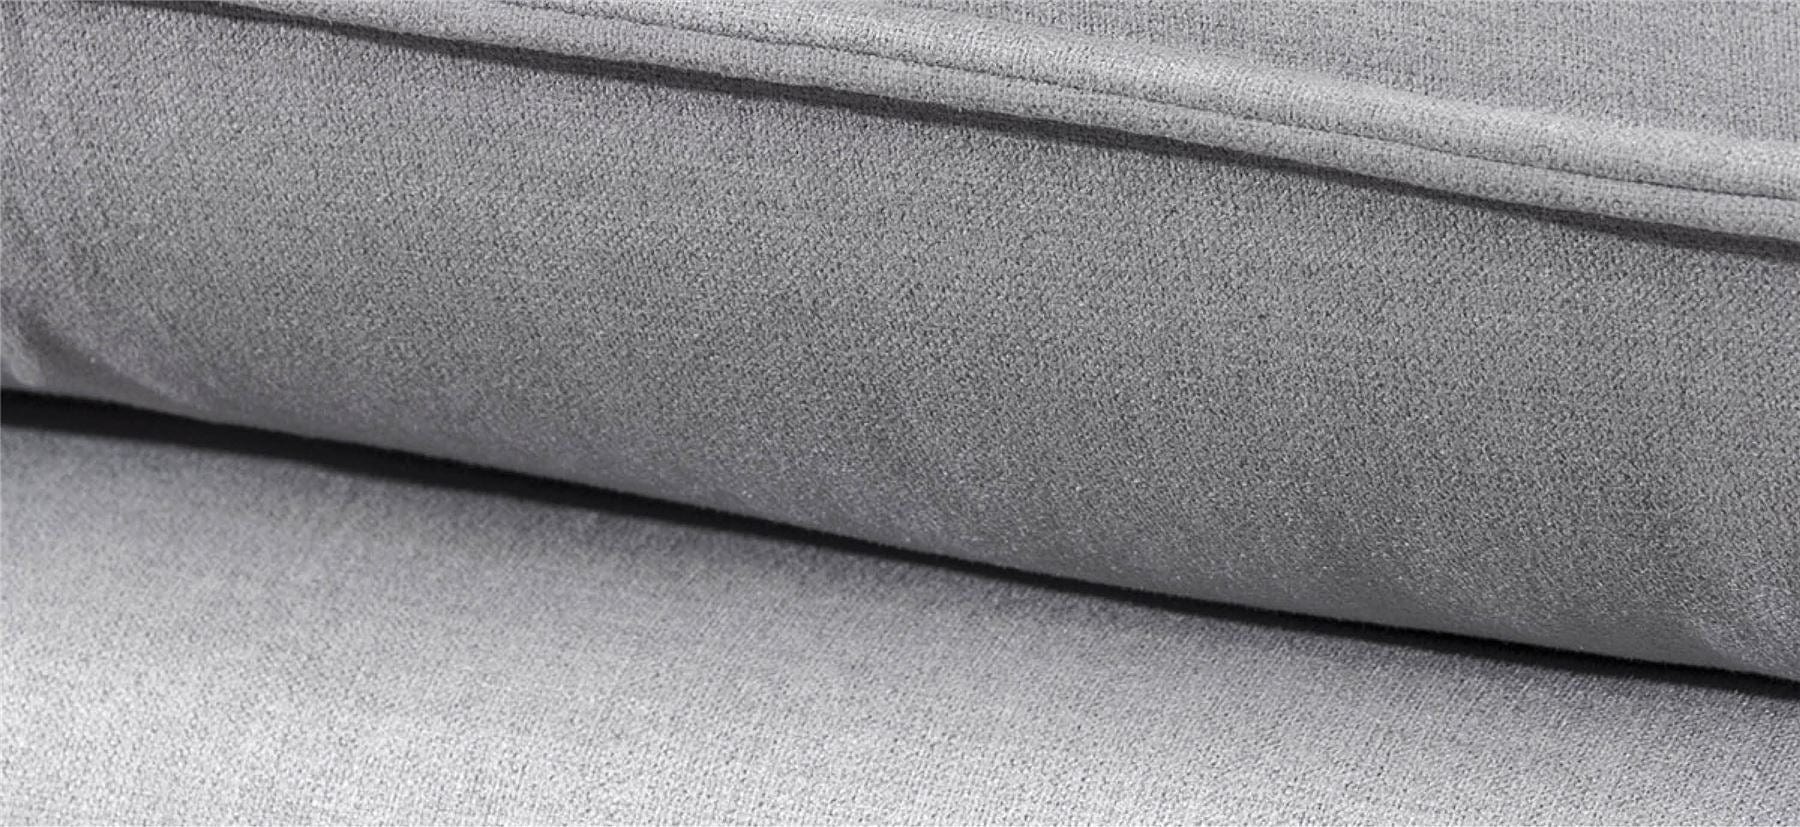 Quatropi Rachel Modern Large 2 Seater Soft Sofa Many Fabrics 2.0 x 0.85m